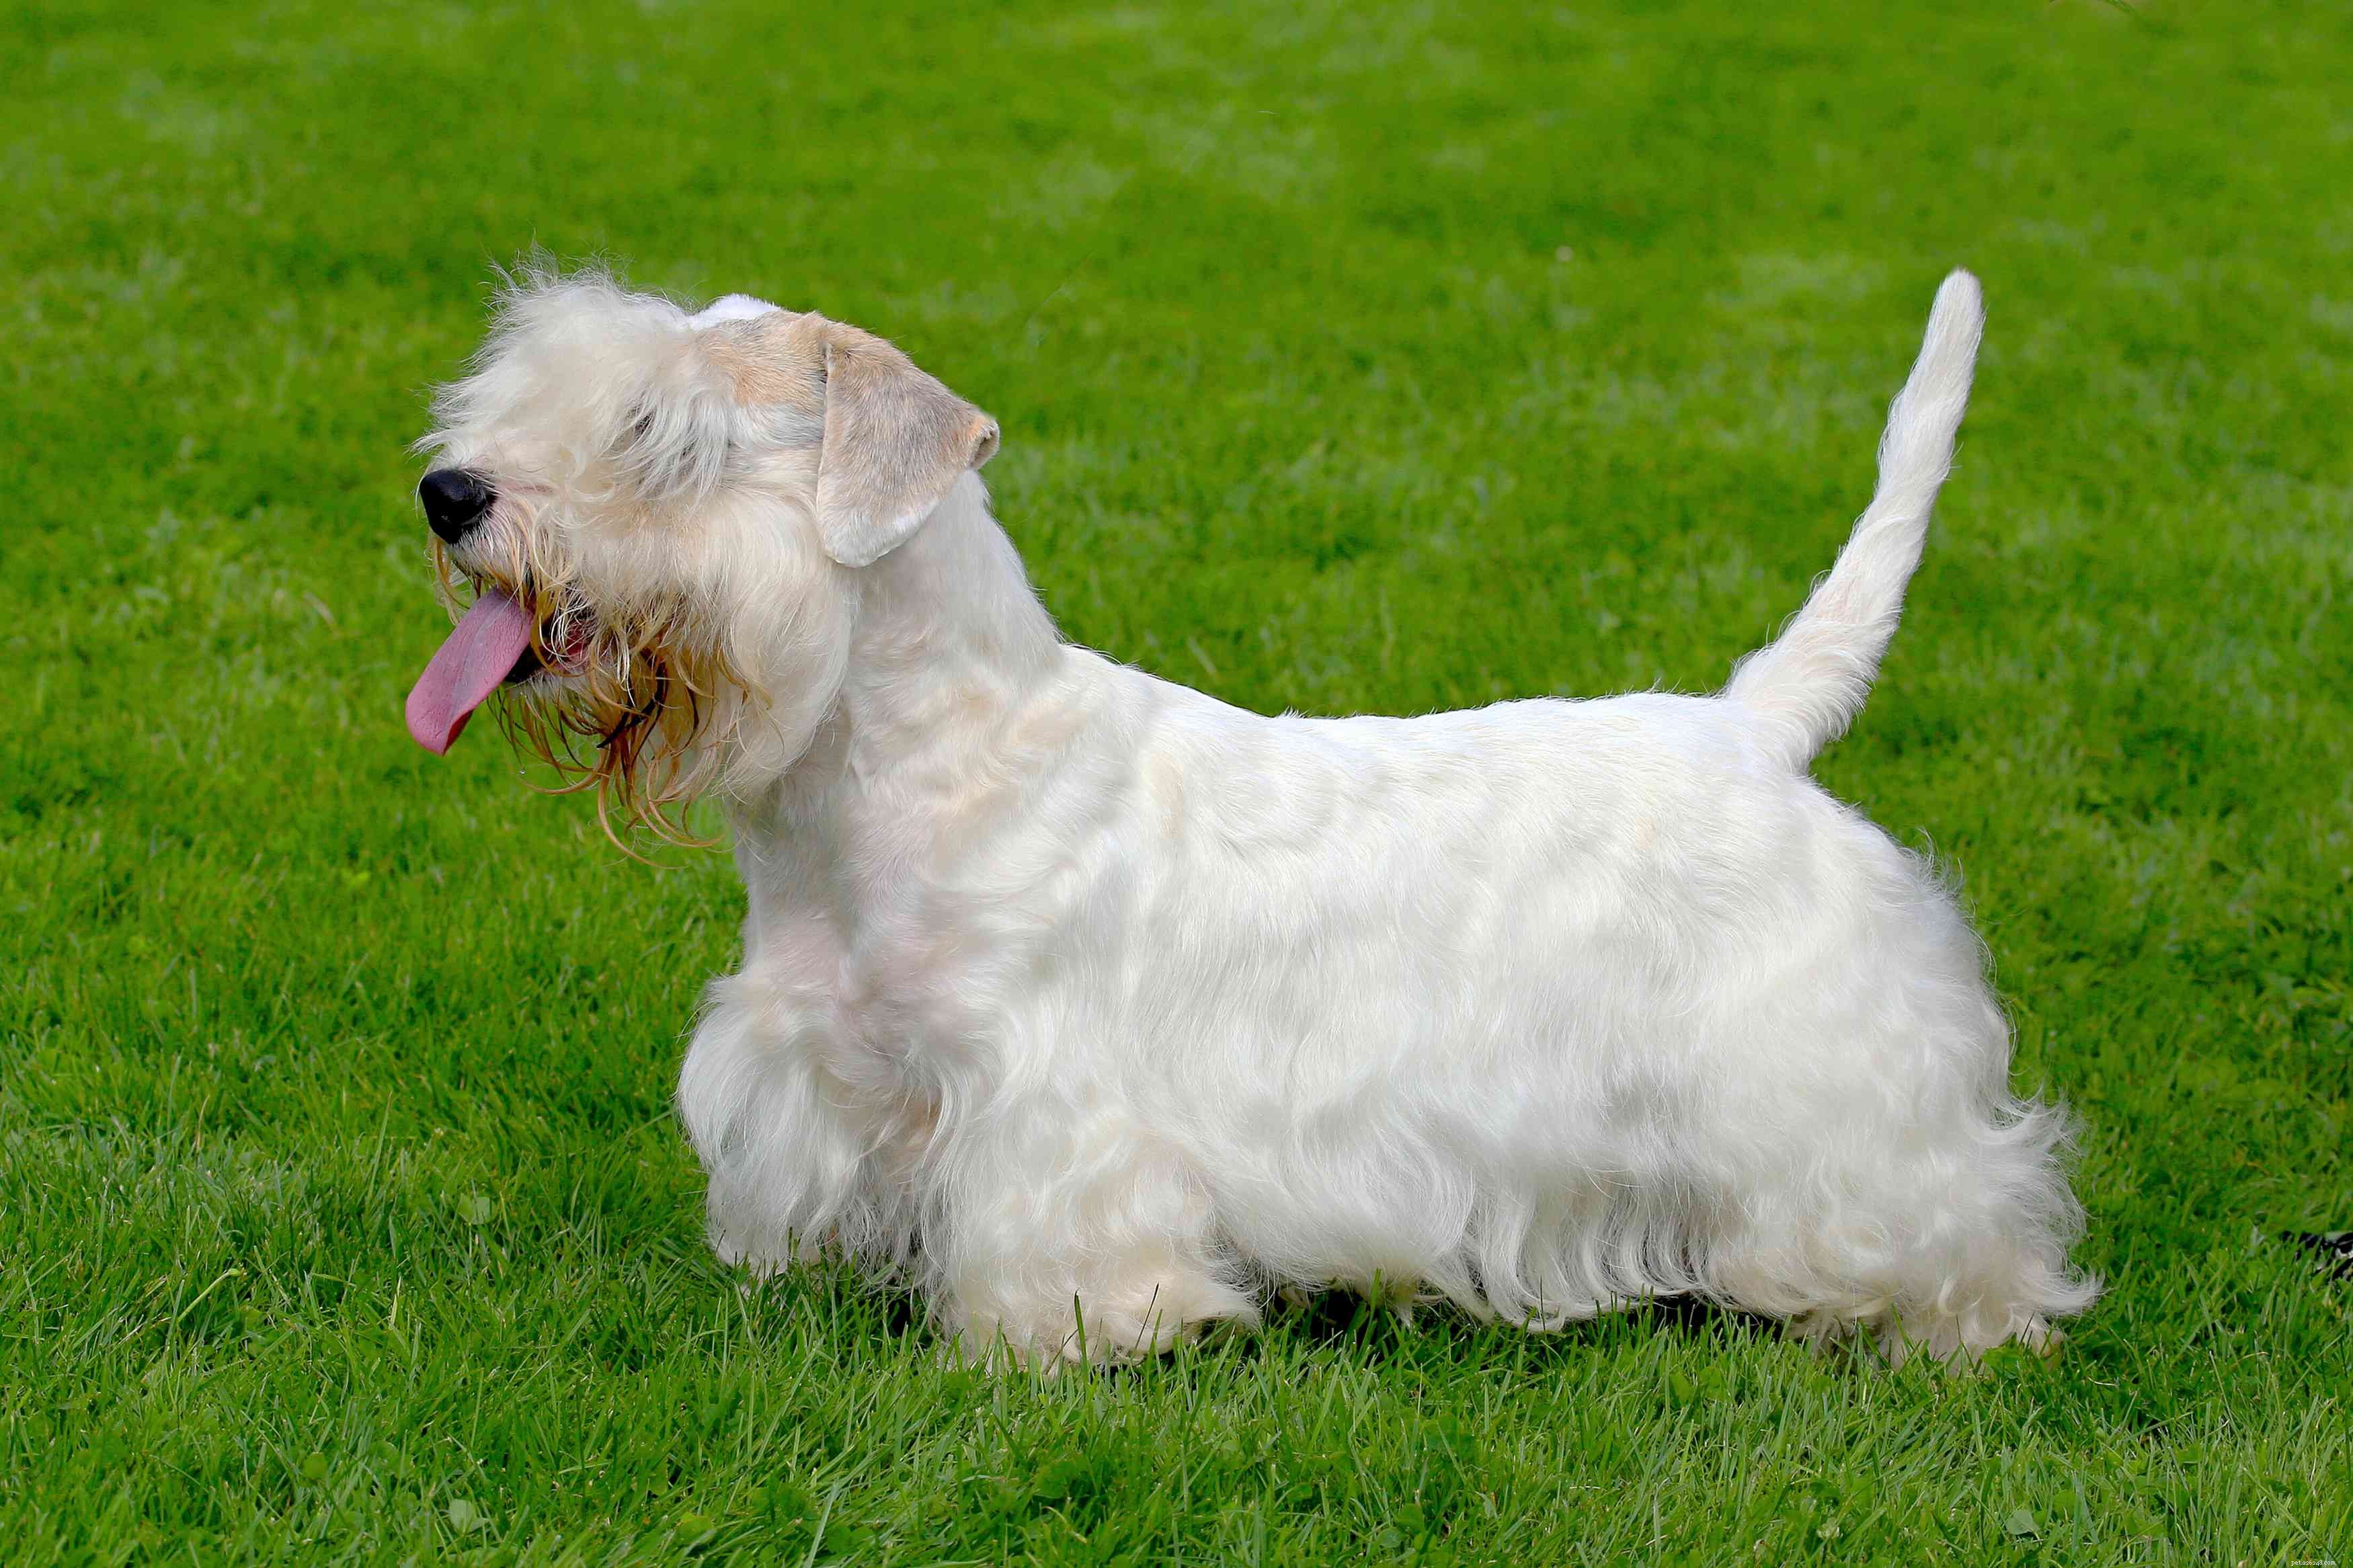 Sealyham Terrier :profil de race de chien